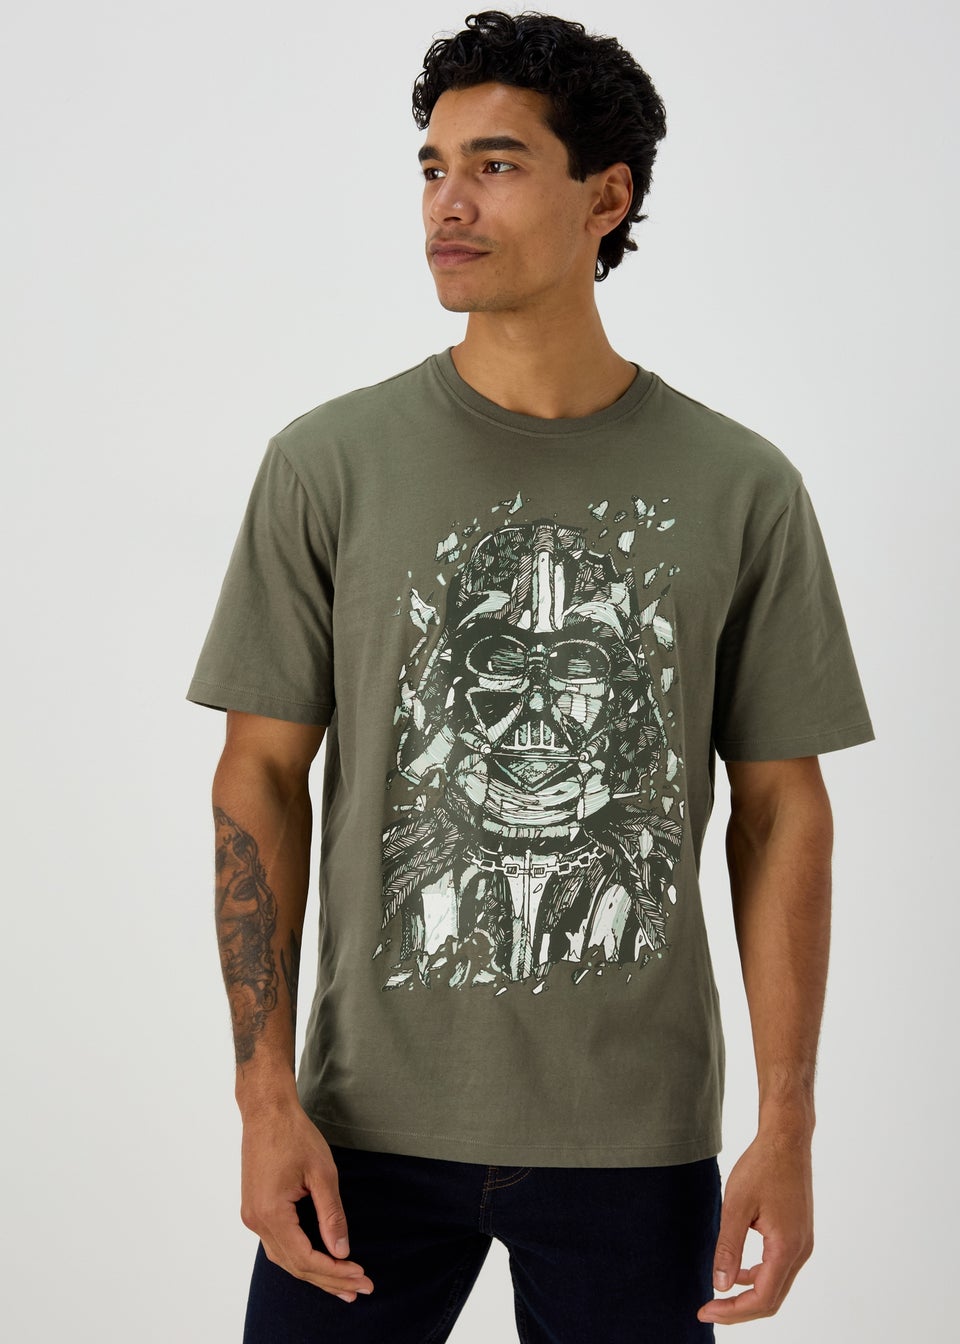 Green Stars Wars Fragment T-Shirt